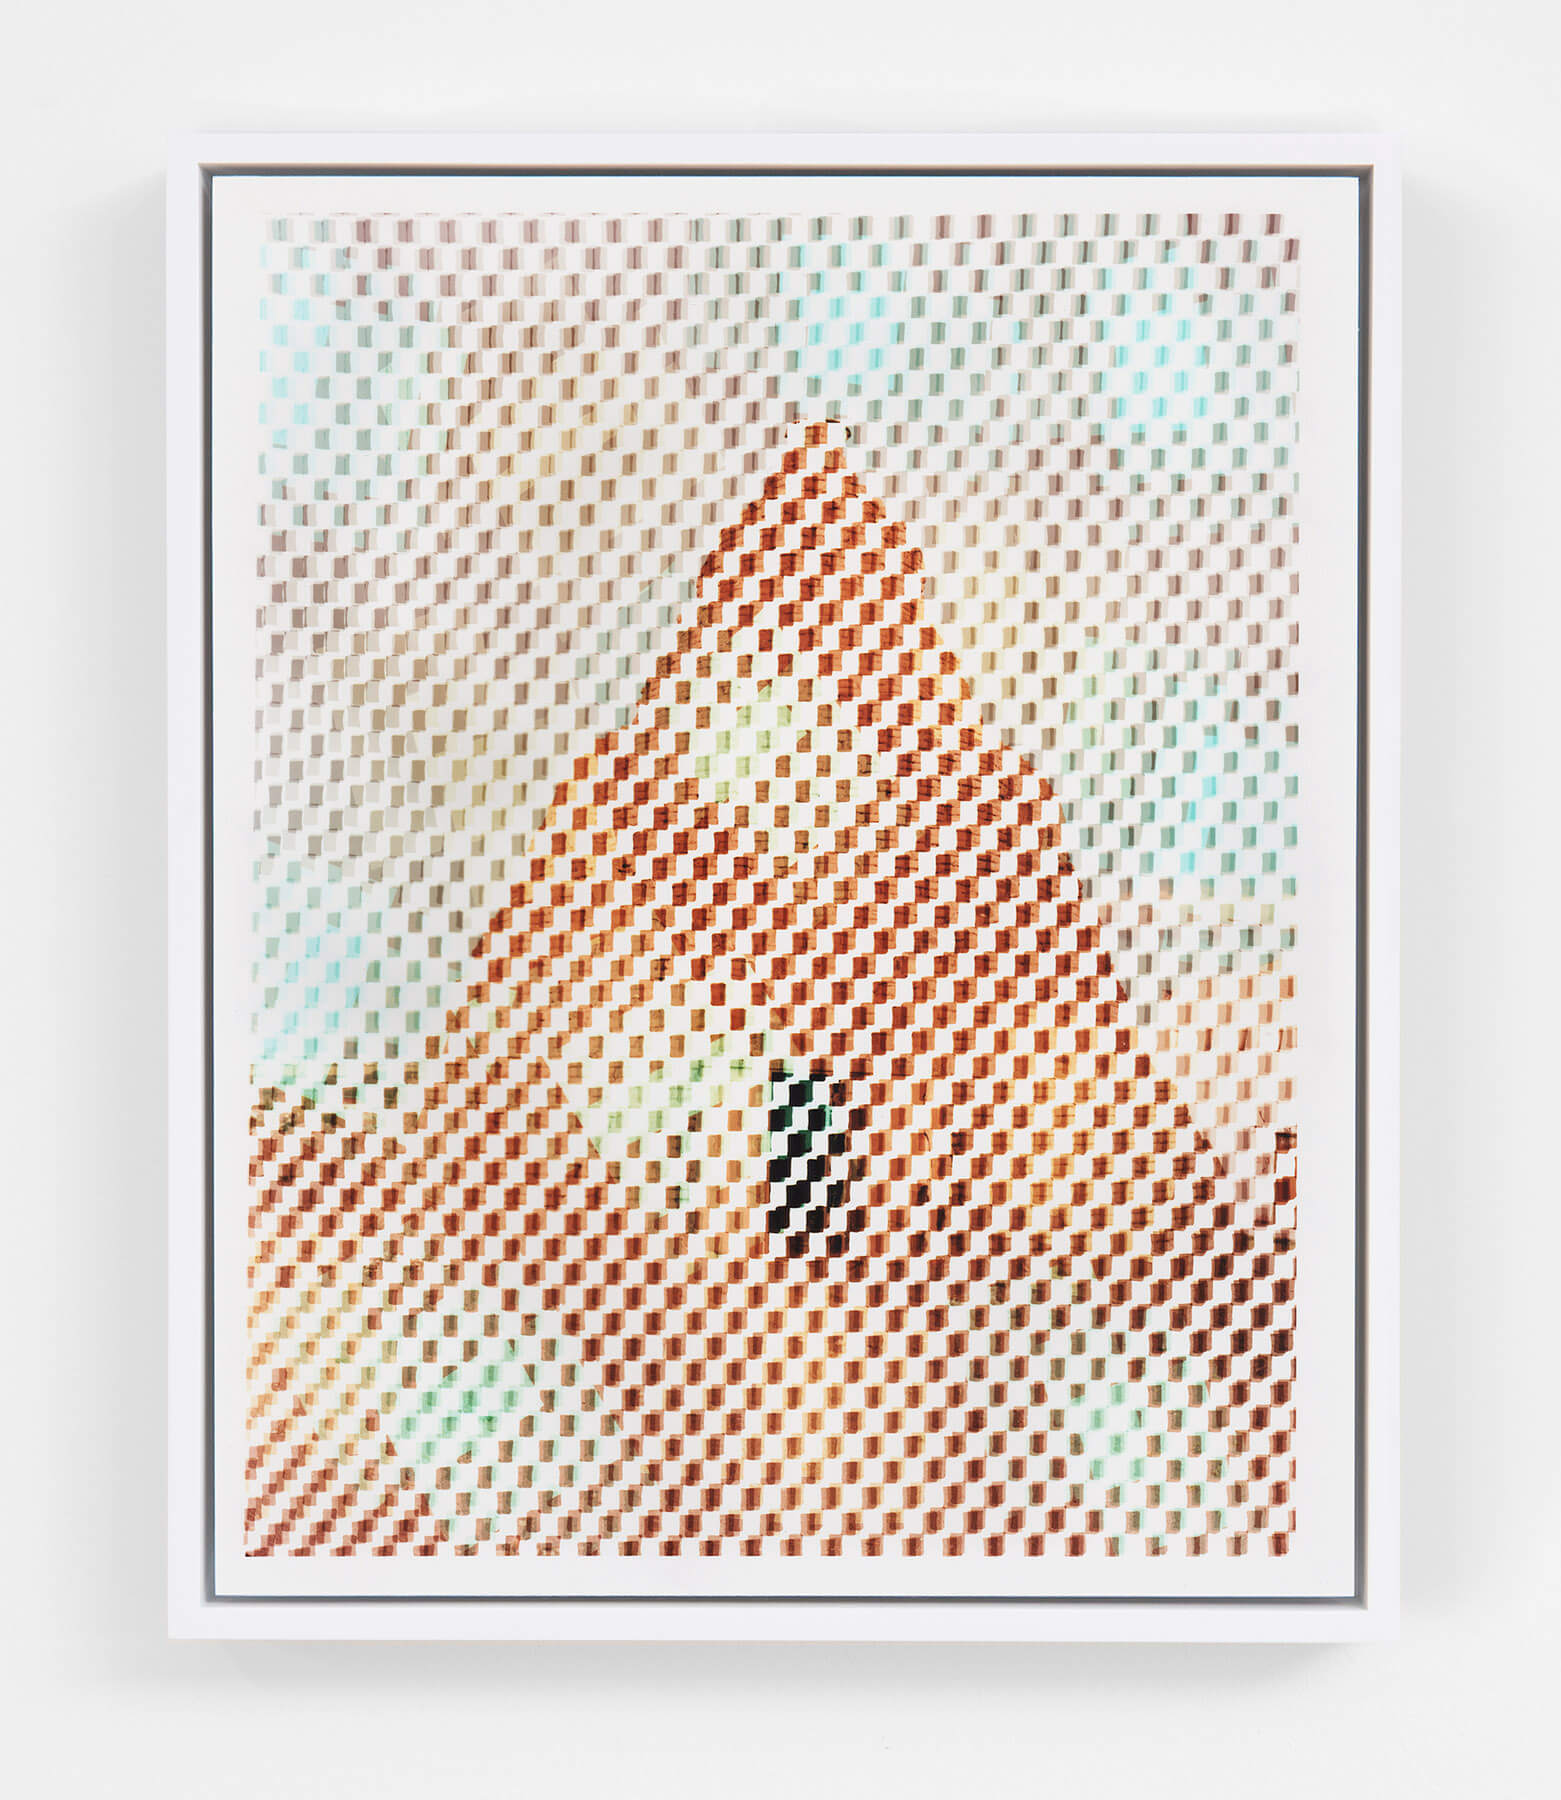 Livia Corona Benjamin
                                        'Infinite Rewrite XI', 2015
                                        10 1/2 x 8 1/2 Inches
                                        unique analog C-print
                                        